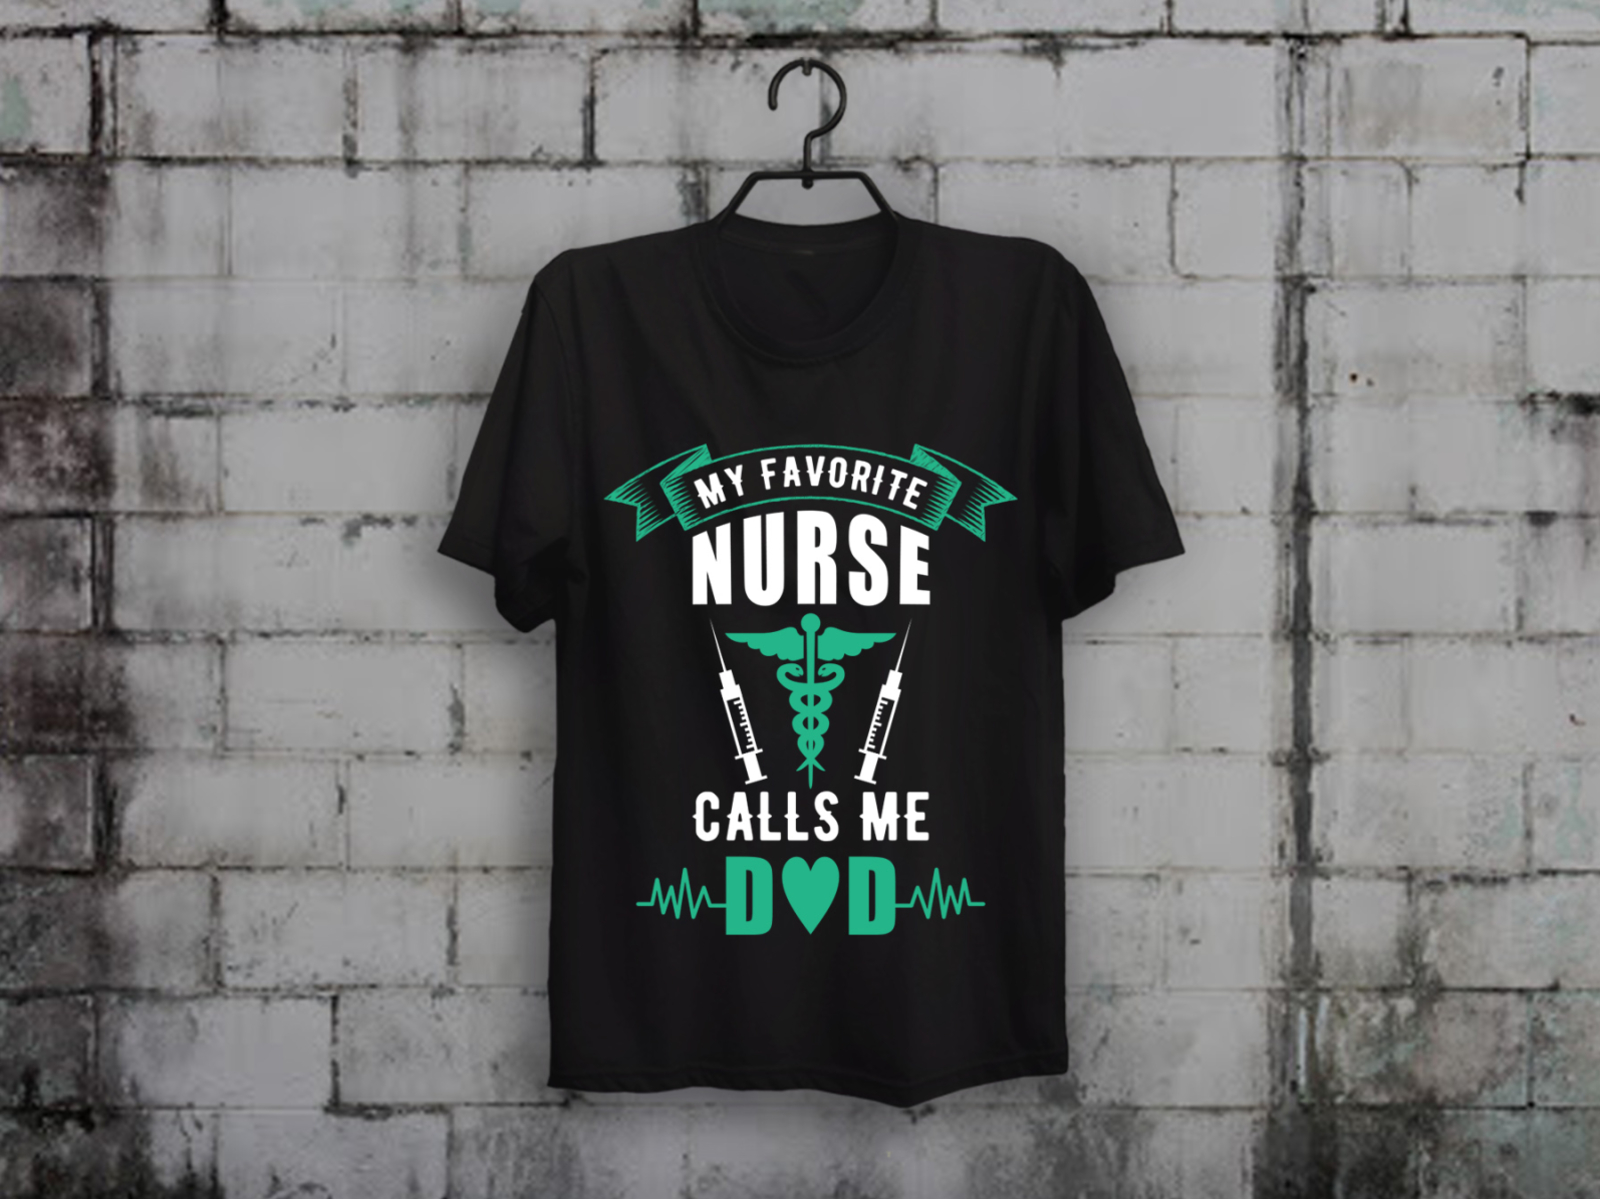 My Favorite Nurse T-shirt Design custom t-shirt design illustration merch by amazon shirts nurse nurses t-shirt design t-shirt designer teesdesign teespring typography